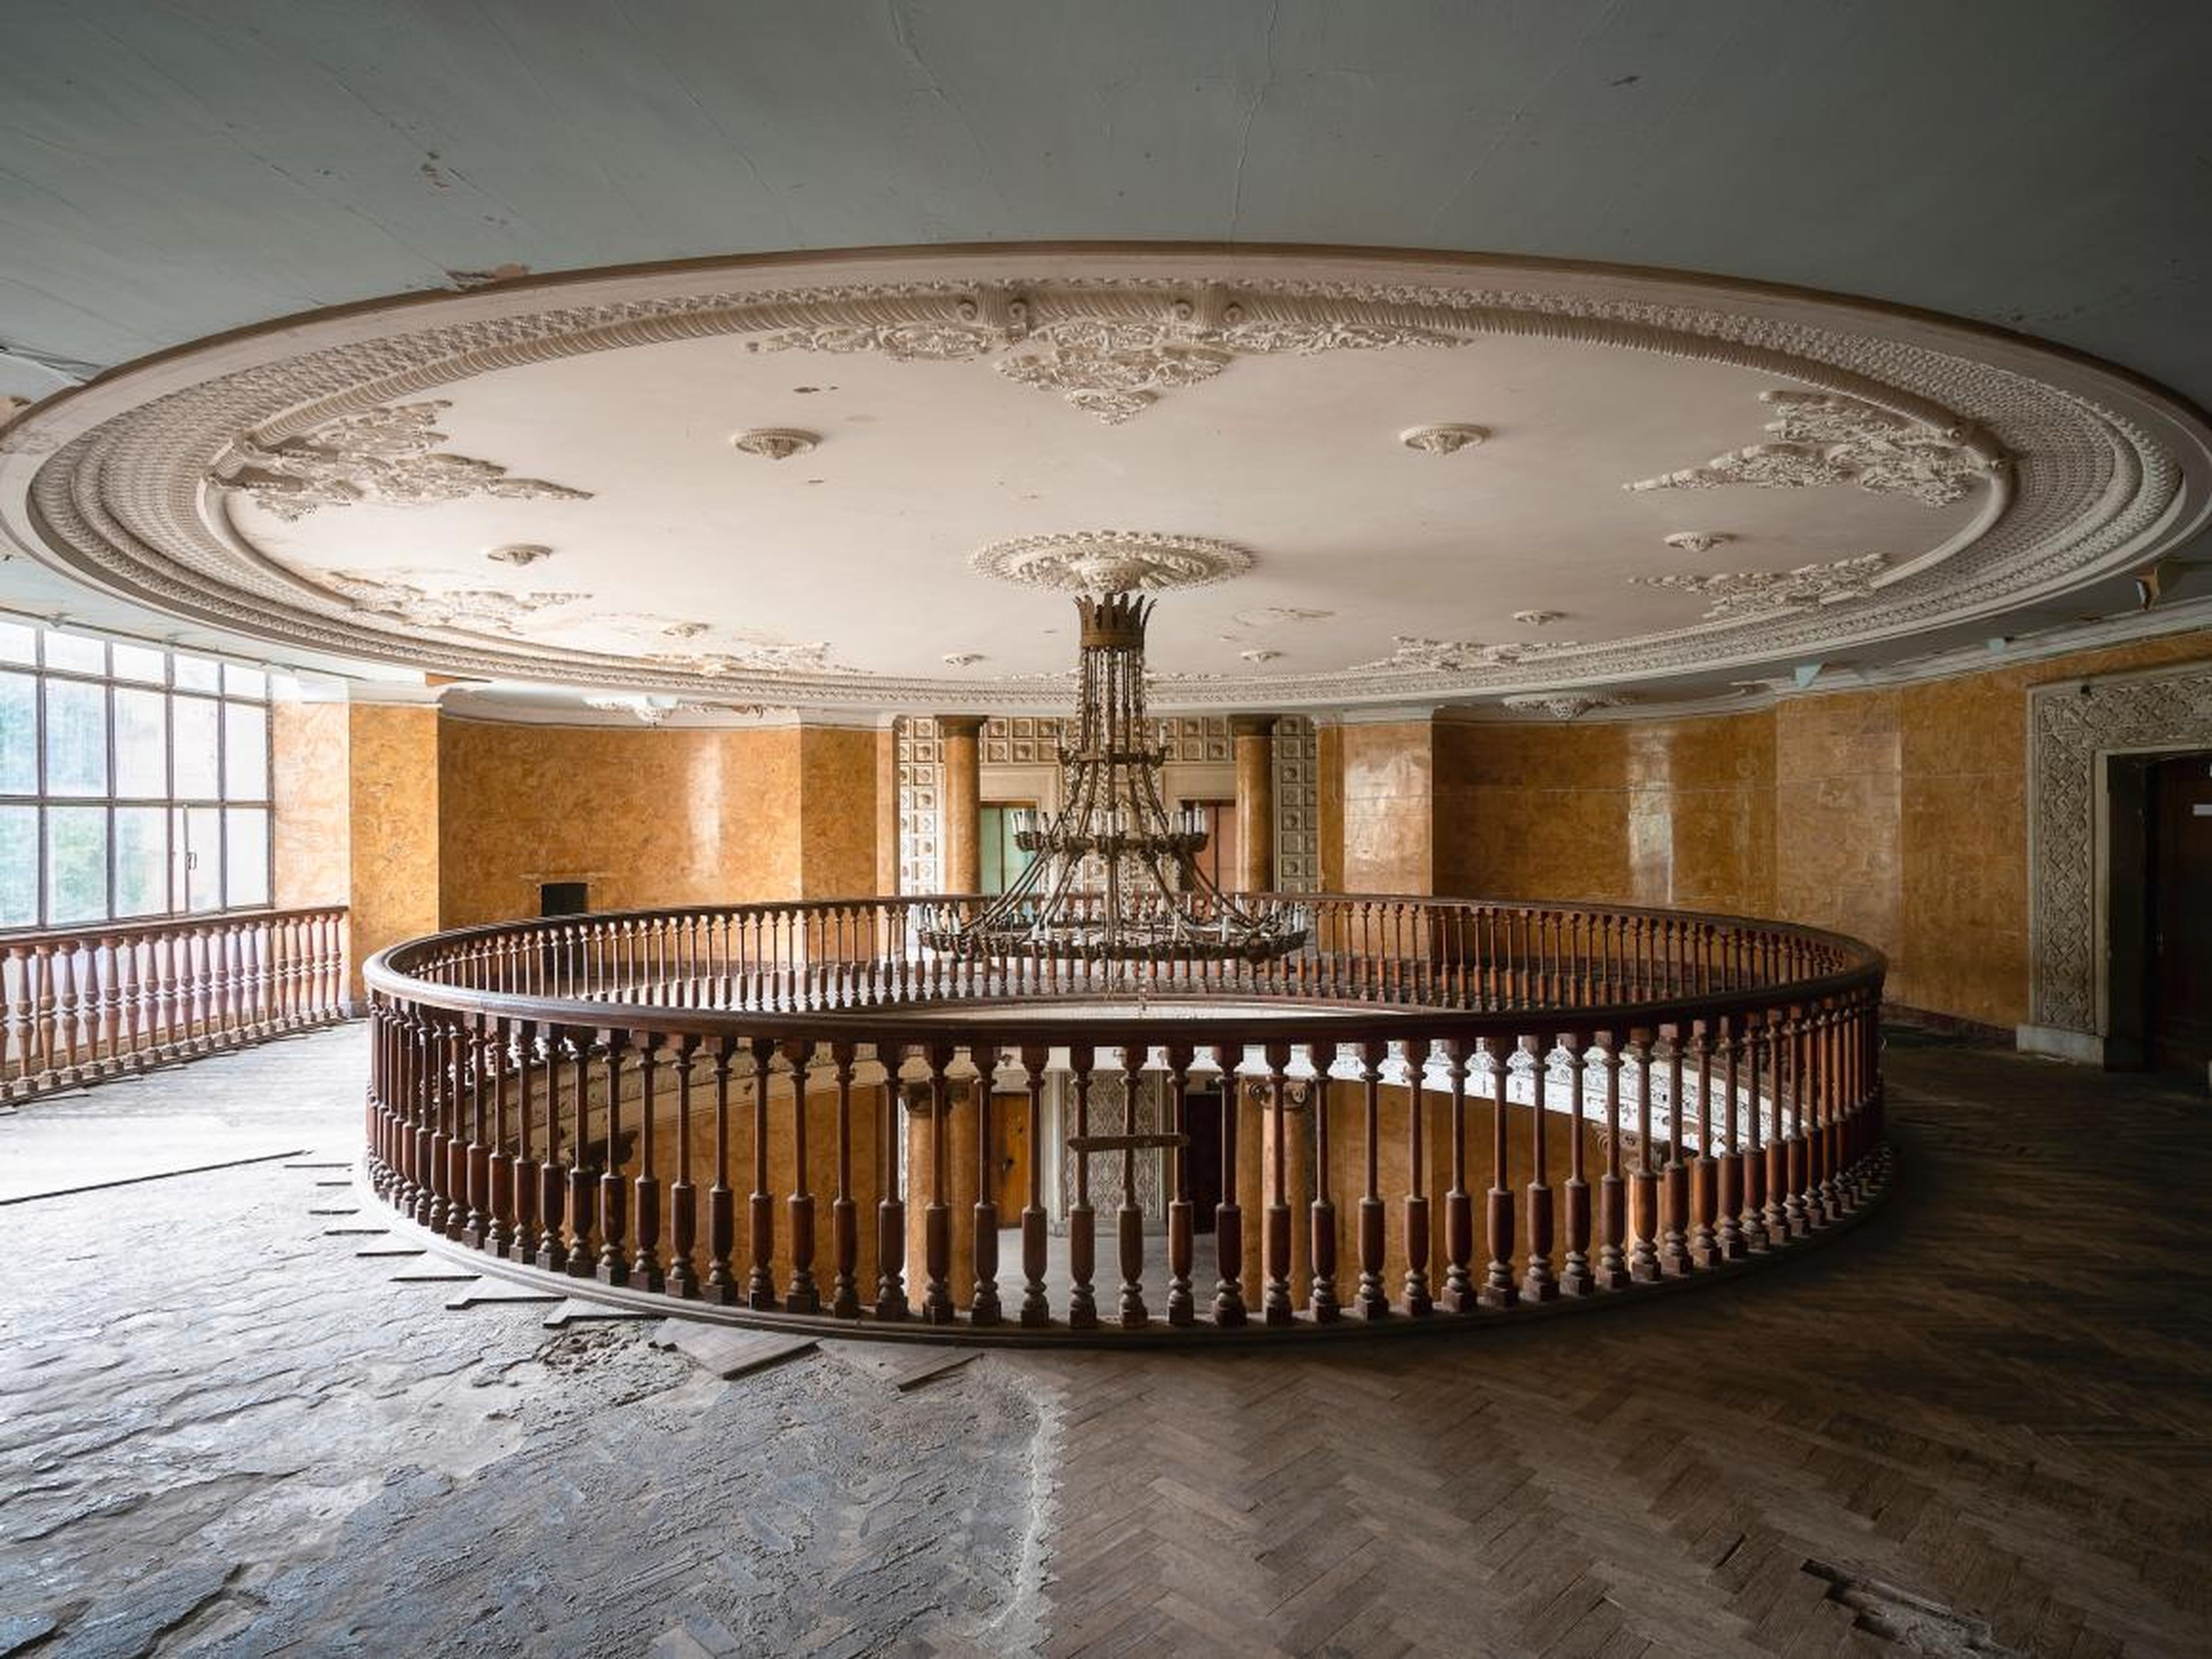 Inside one of the Soviet-era sanatoriums.